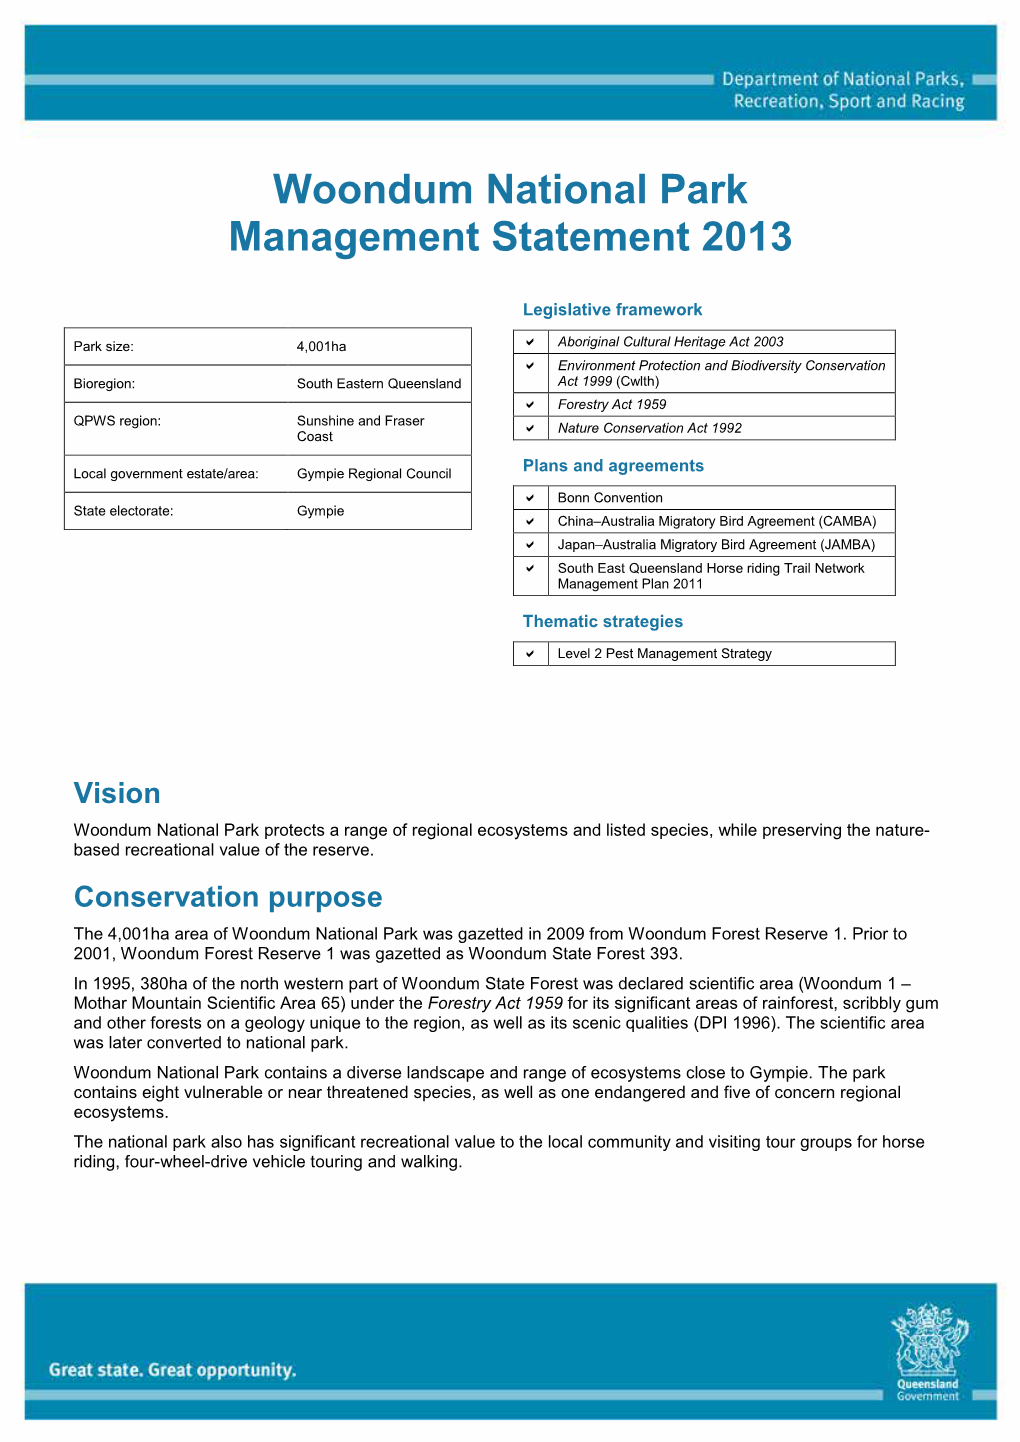 Woondum National Park Management Statement 2013